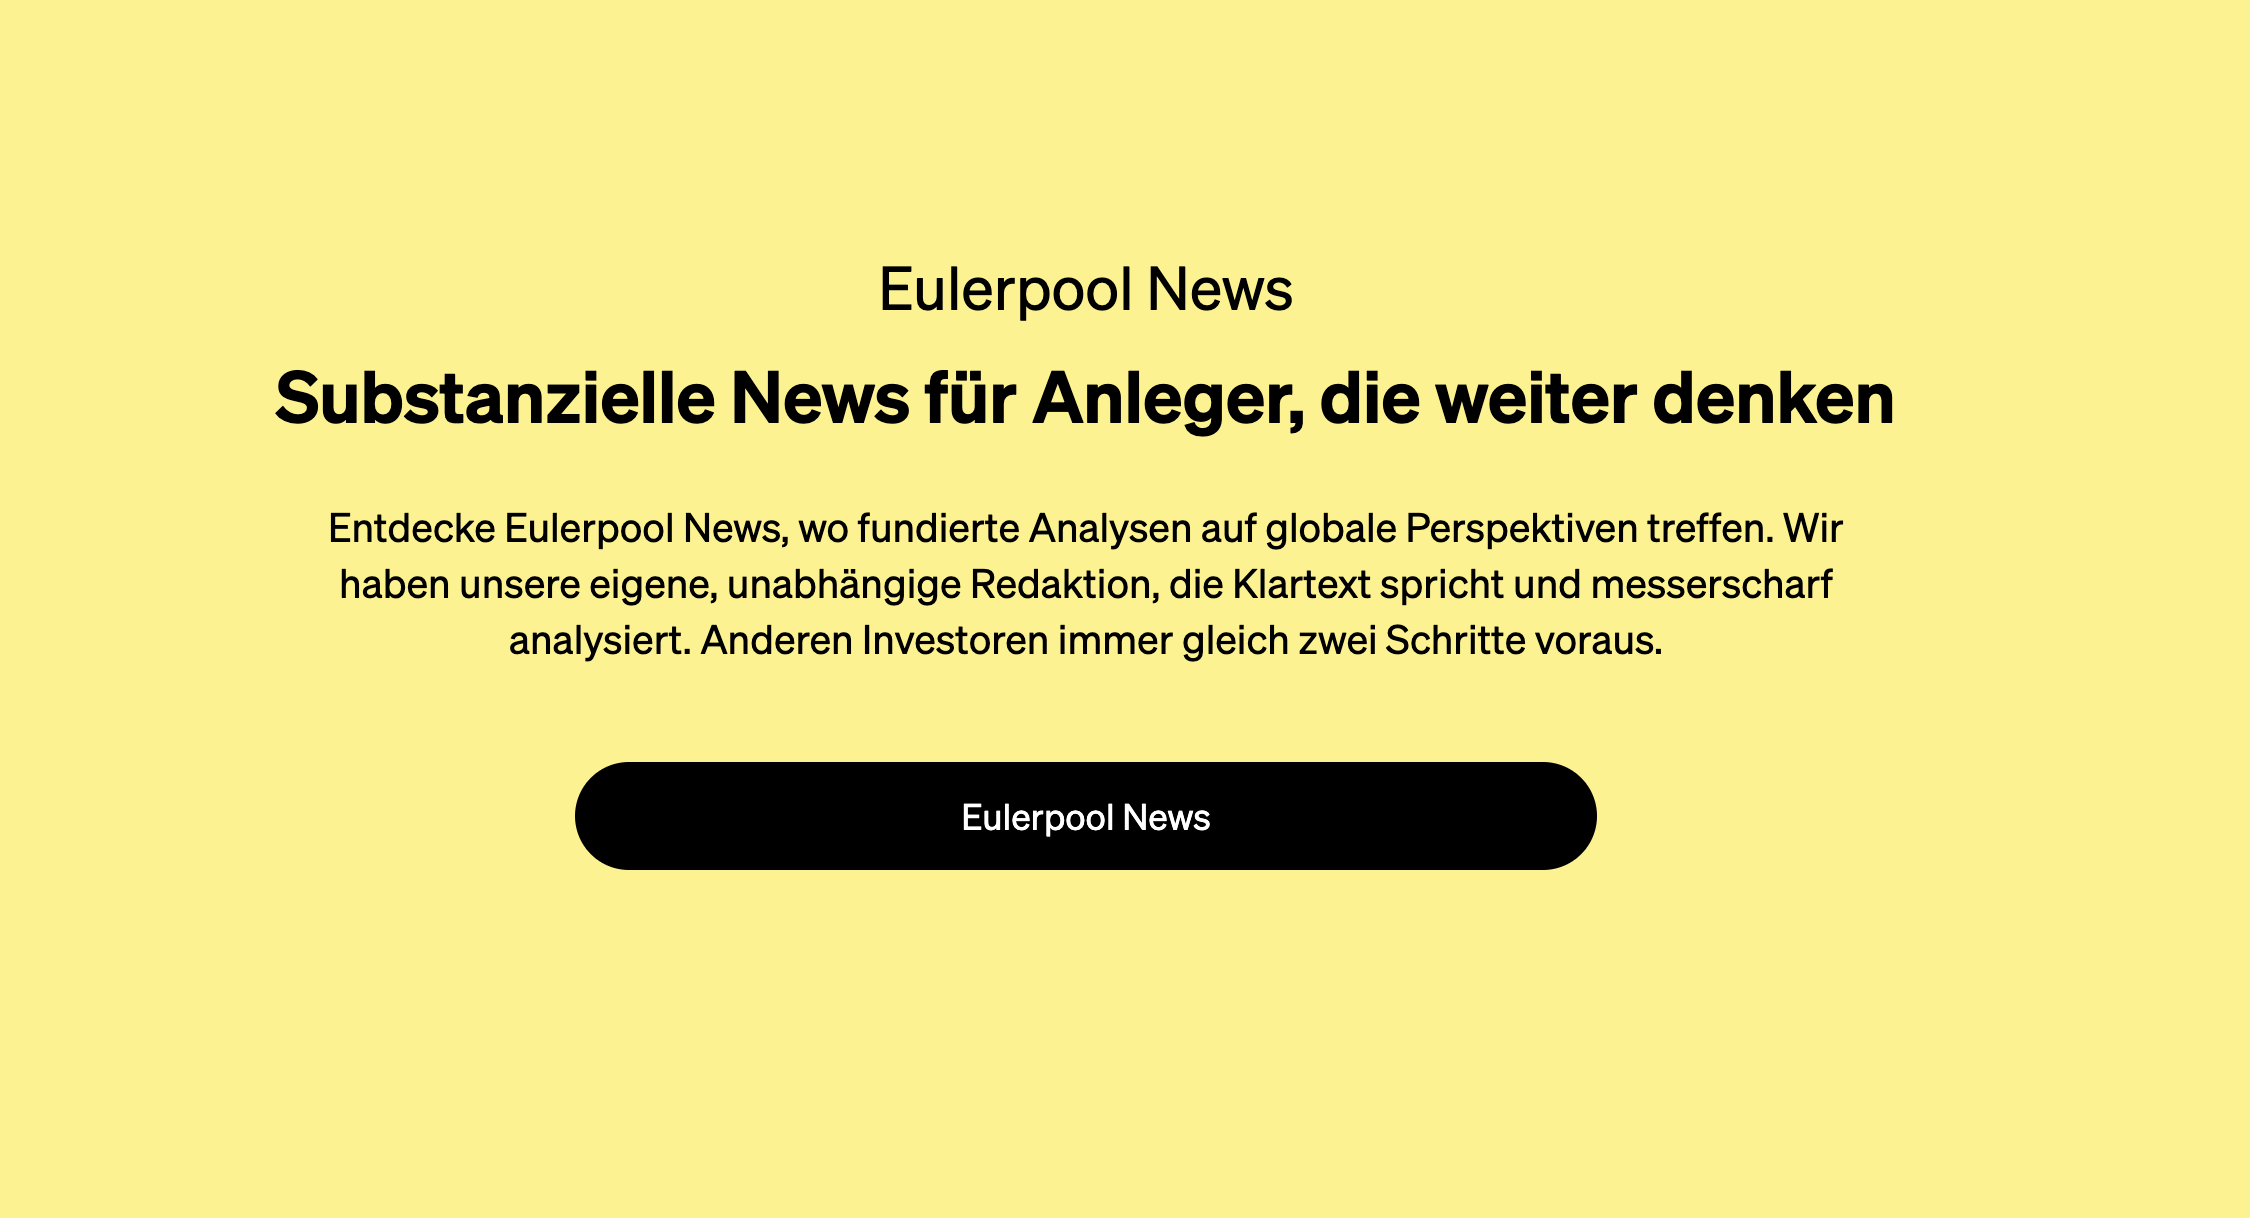 Eulerpool Research Systems startet eigene Redaktion “Eulerpool News”